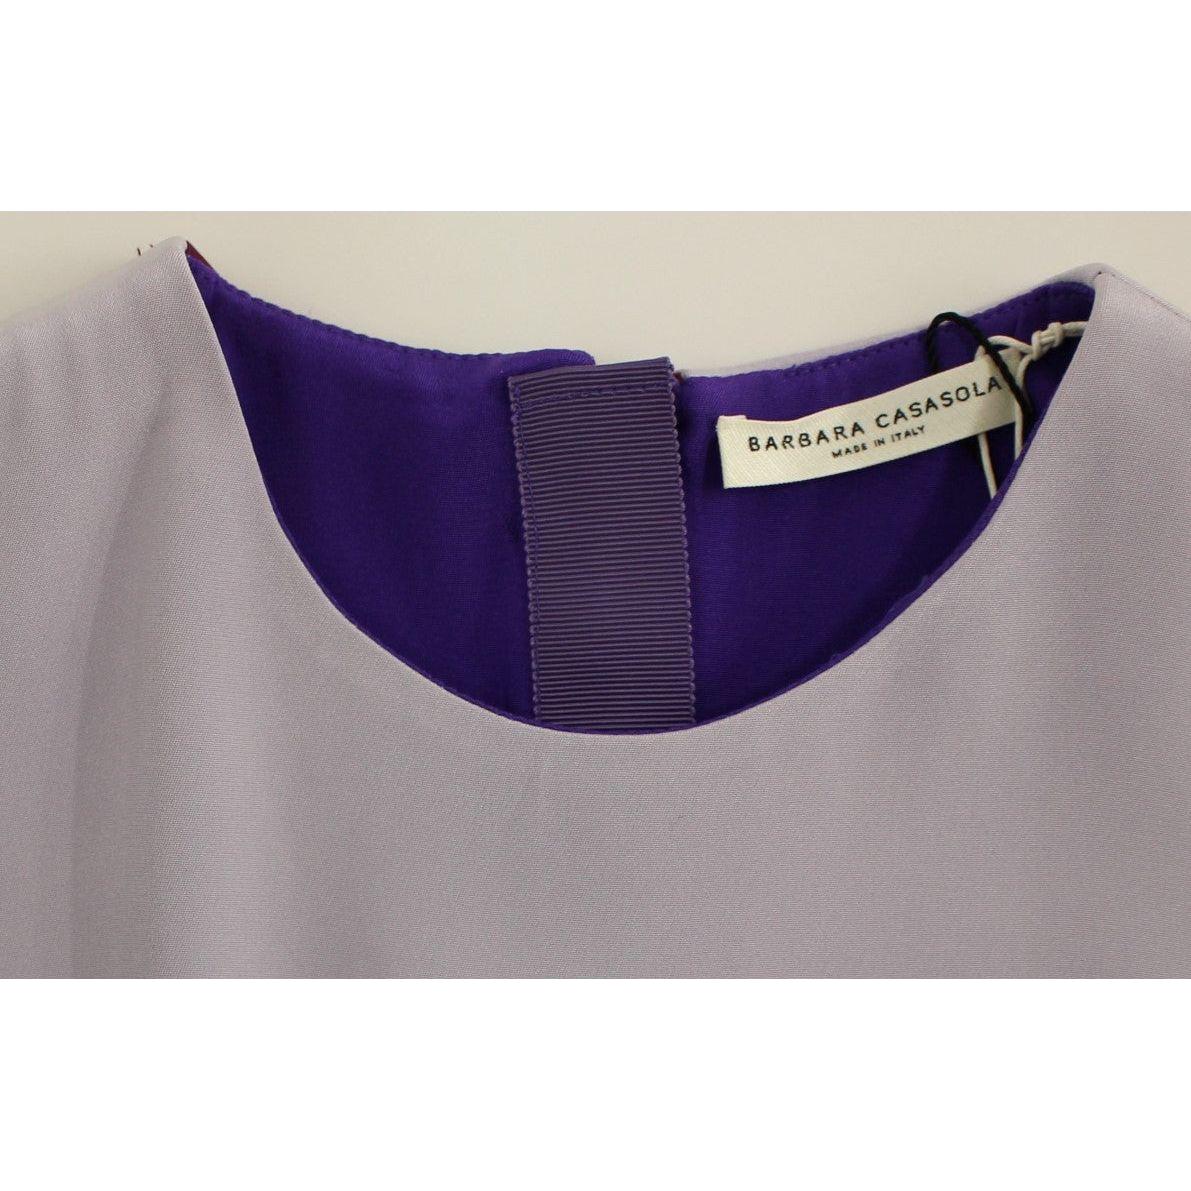 Barbara Casasola Elegant Long Silk Gown in Lavender purple-lavender-gown-maxi-silk-long-dress-1 219588-purple-lavender-gown-maxi-silk-long-dress-3-4.jpg